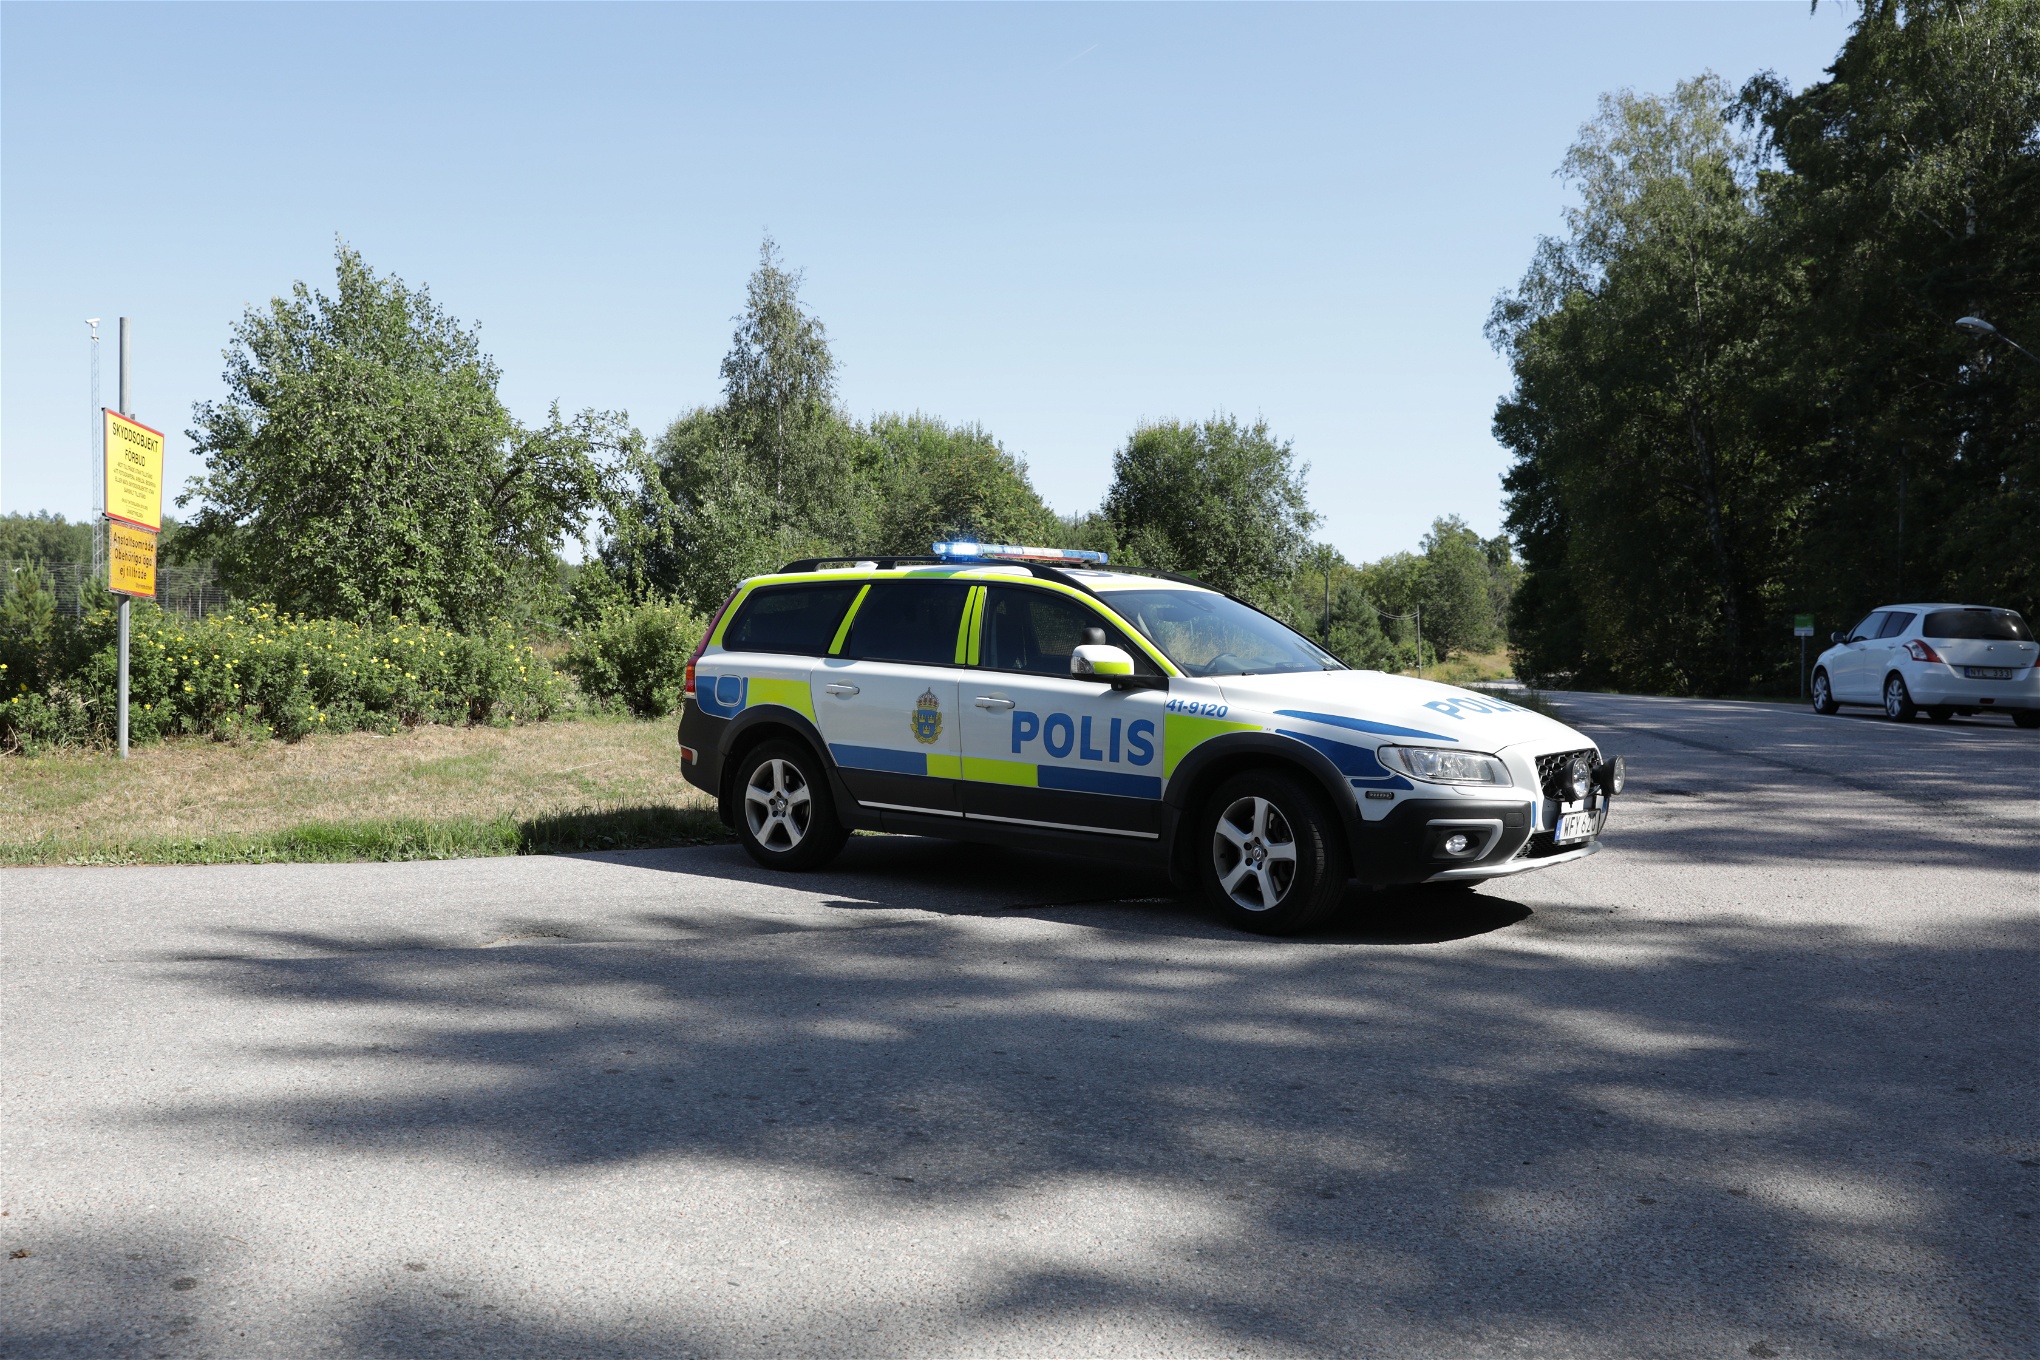 Polisinsats vid Hällbyanstalten i Eskilstuna